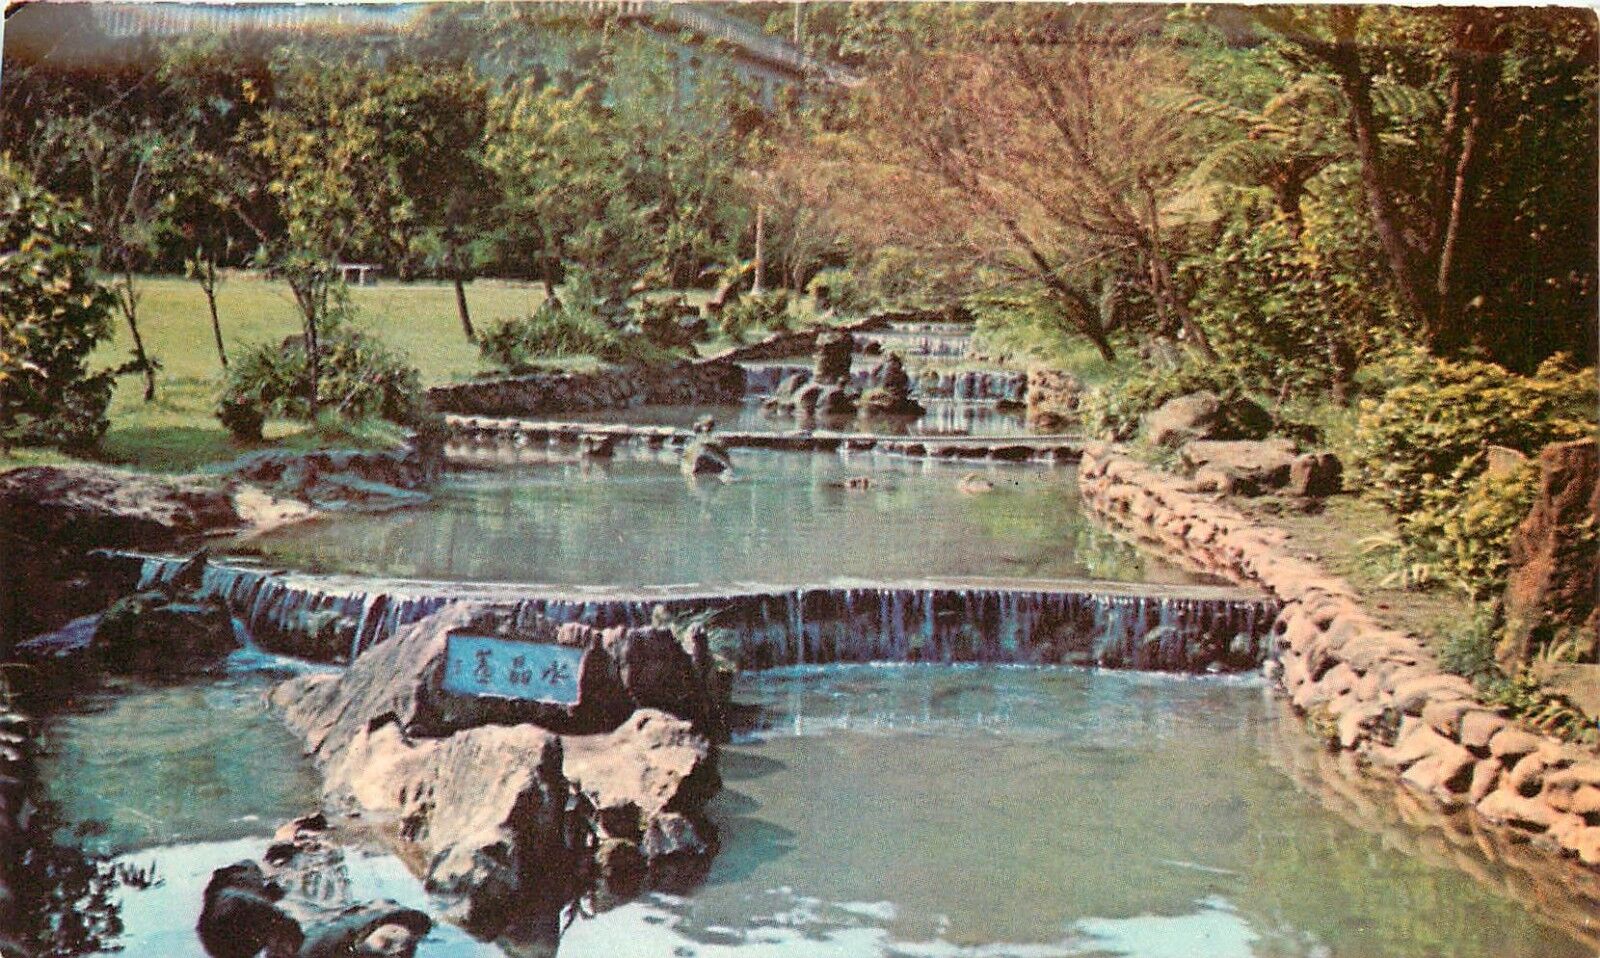 Vintage Postcard; Crystal Curtain Yangmingshan Park Taiwan, Posted 1947 Hsinchu